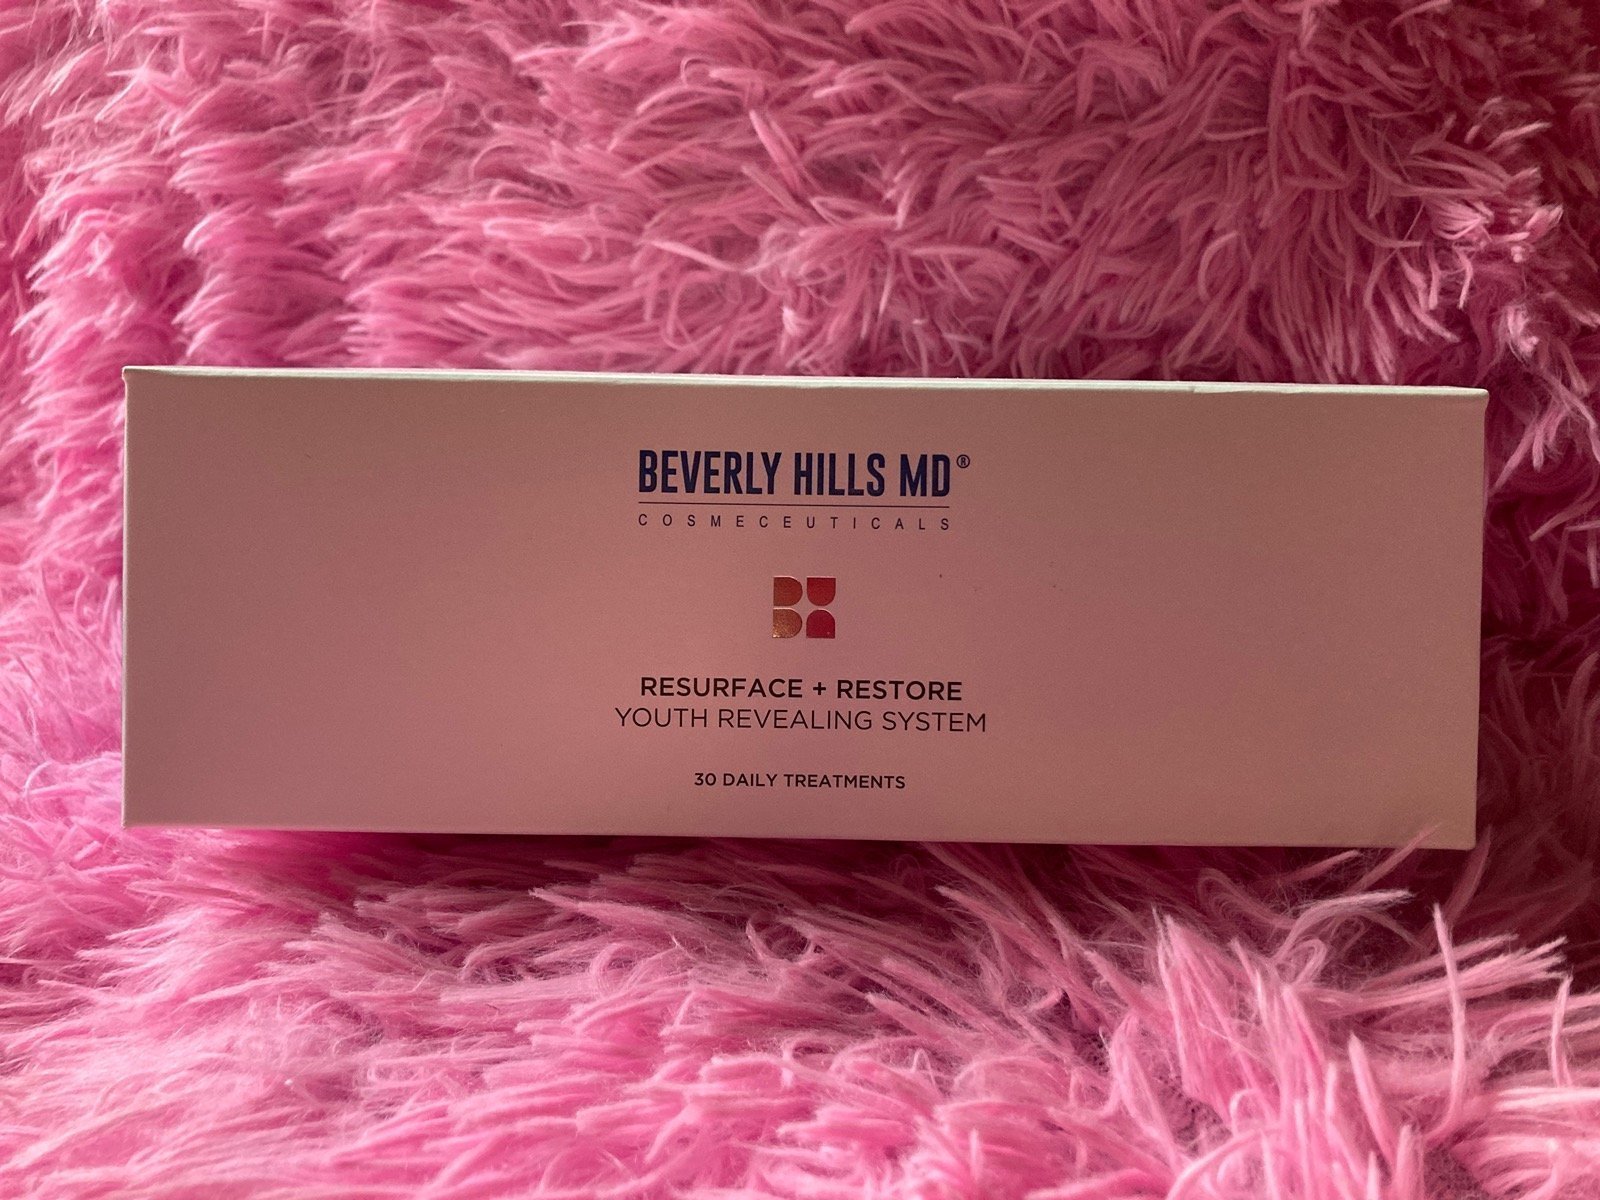 BHMD Beverly Hills MD Resurface + Restore, New in box Iy7Cit9ka